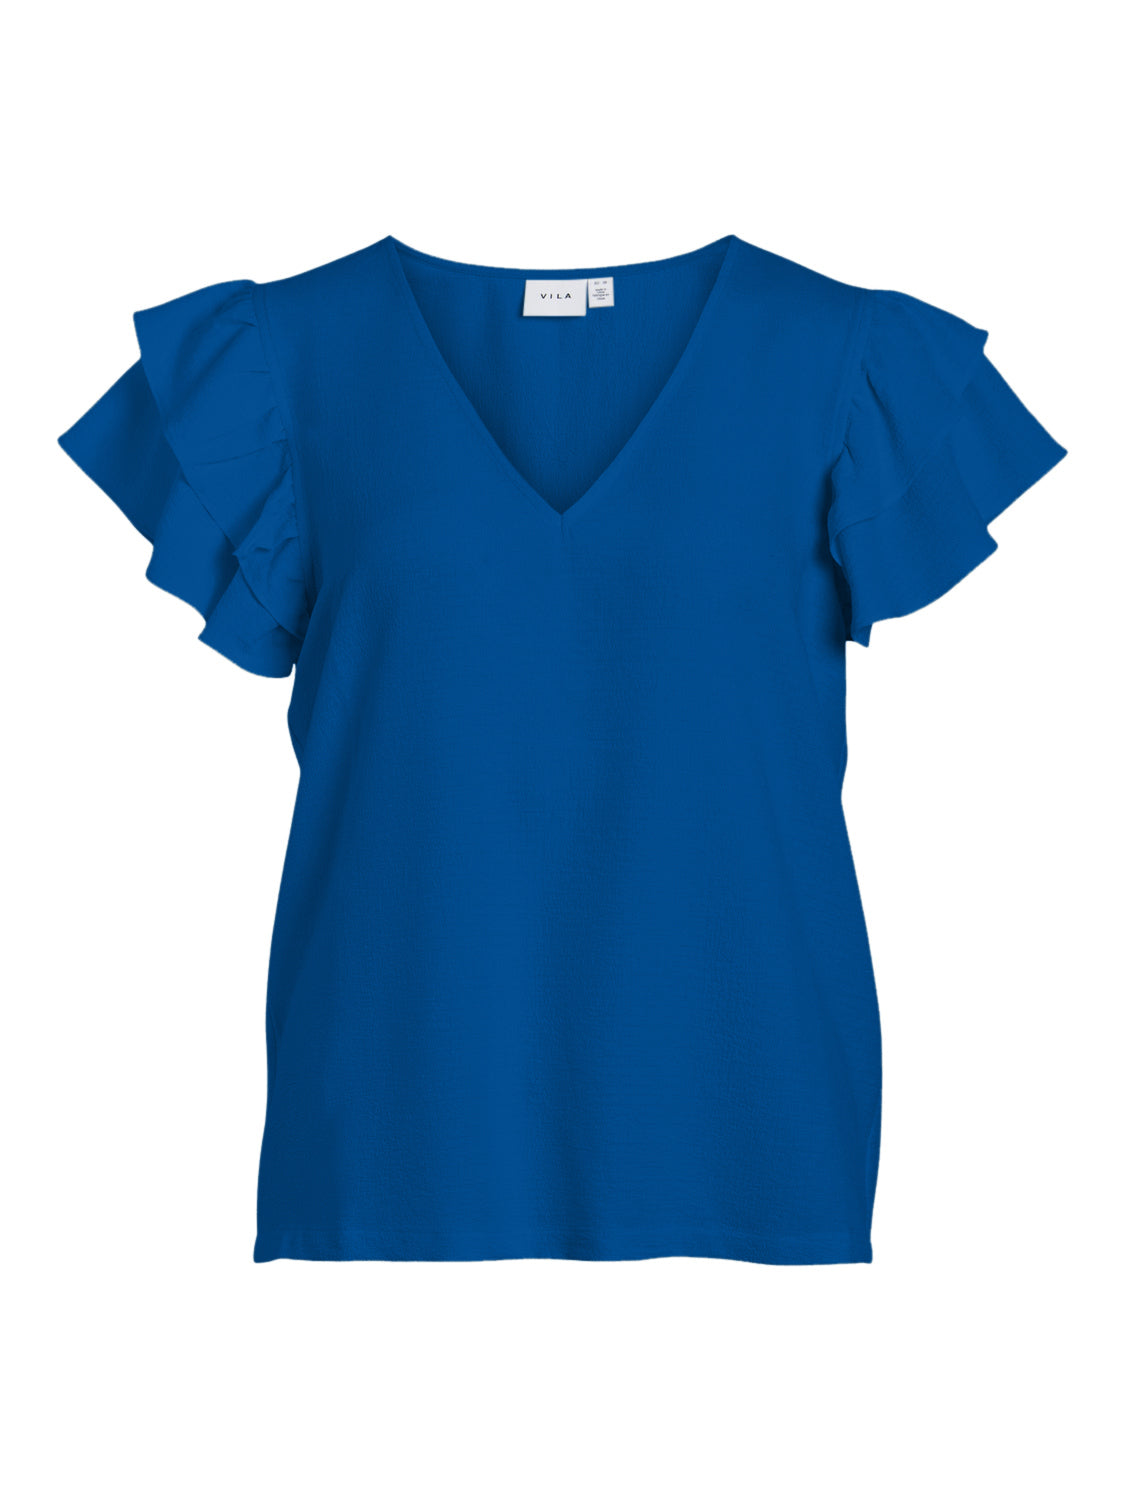 VIMACY T-Shirts & Tops - Lapis Blue